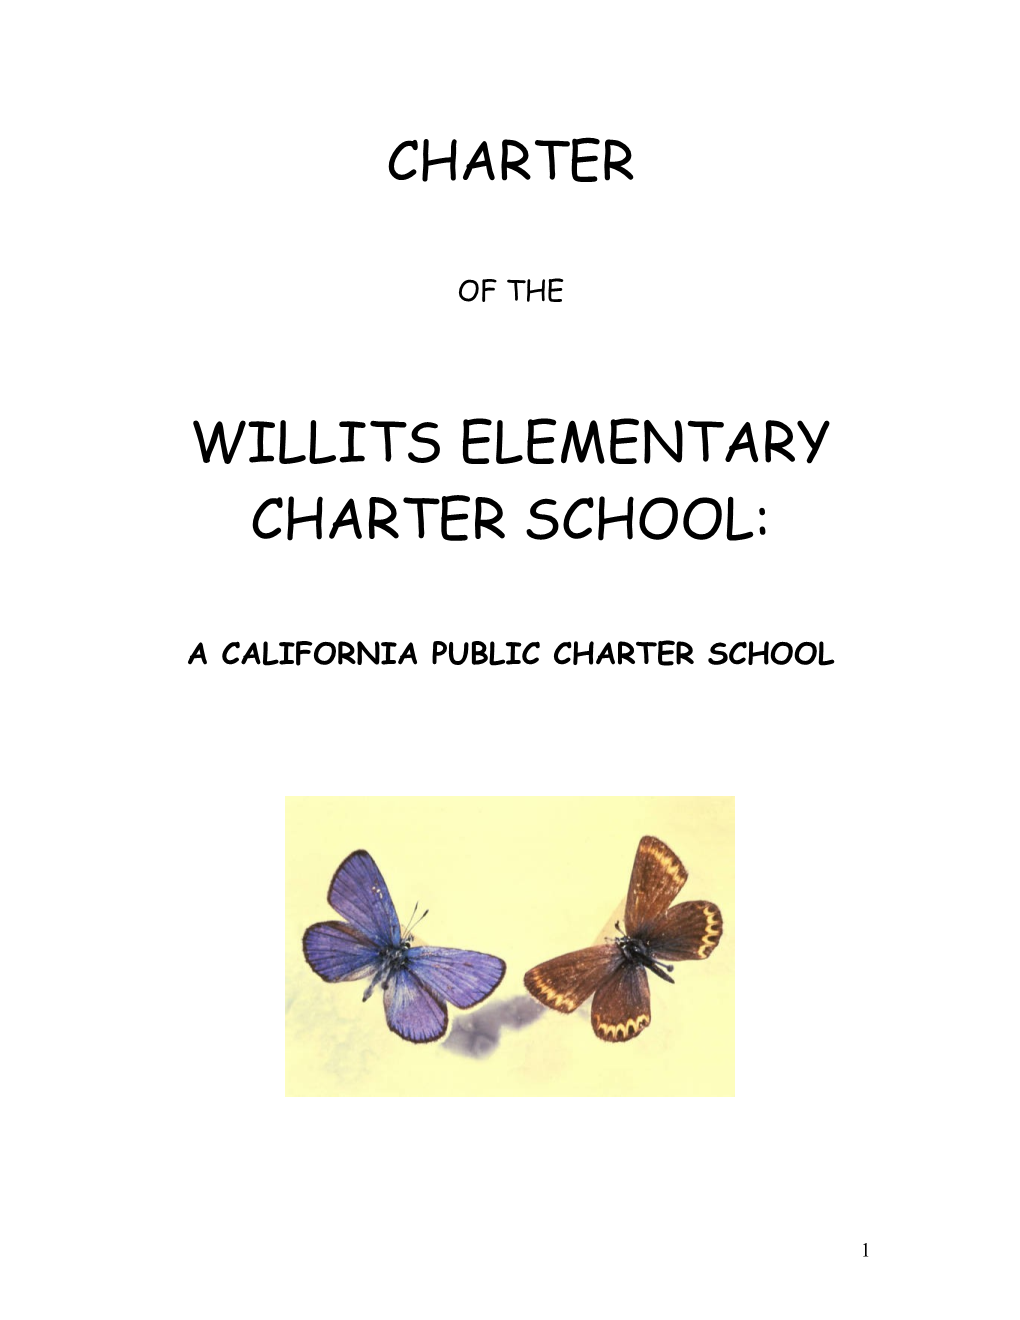 A California Public Charter School